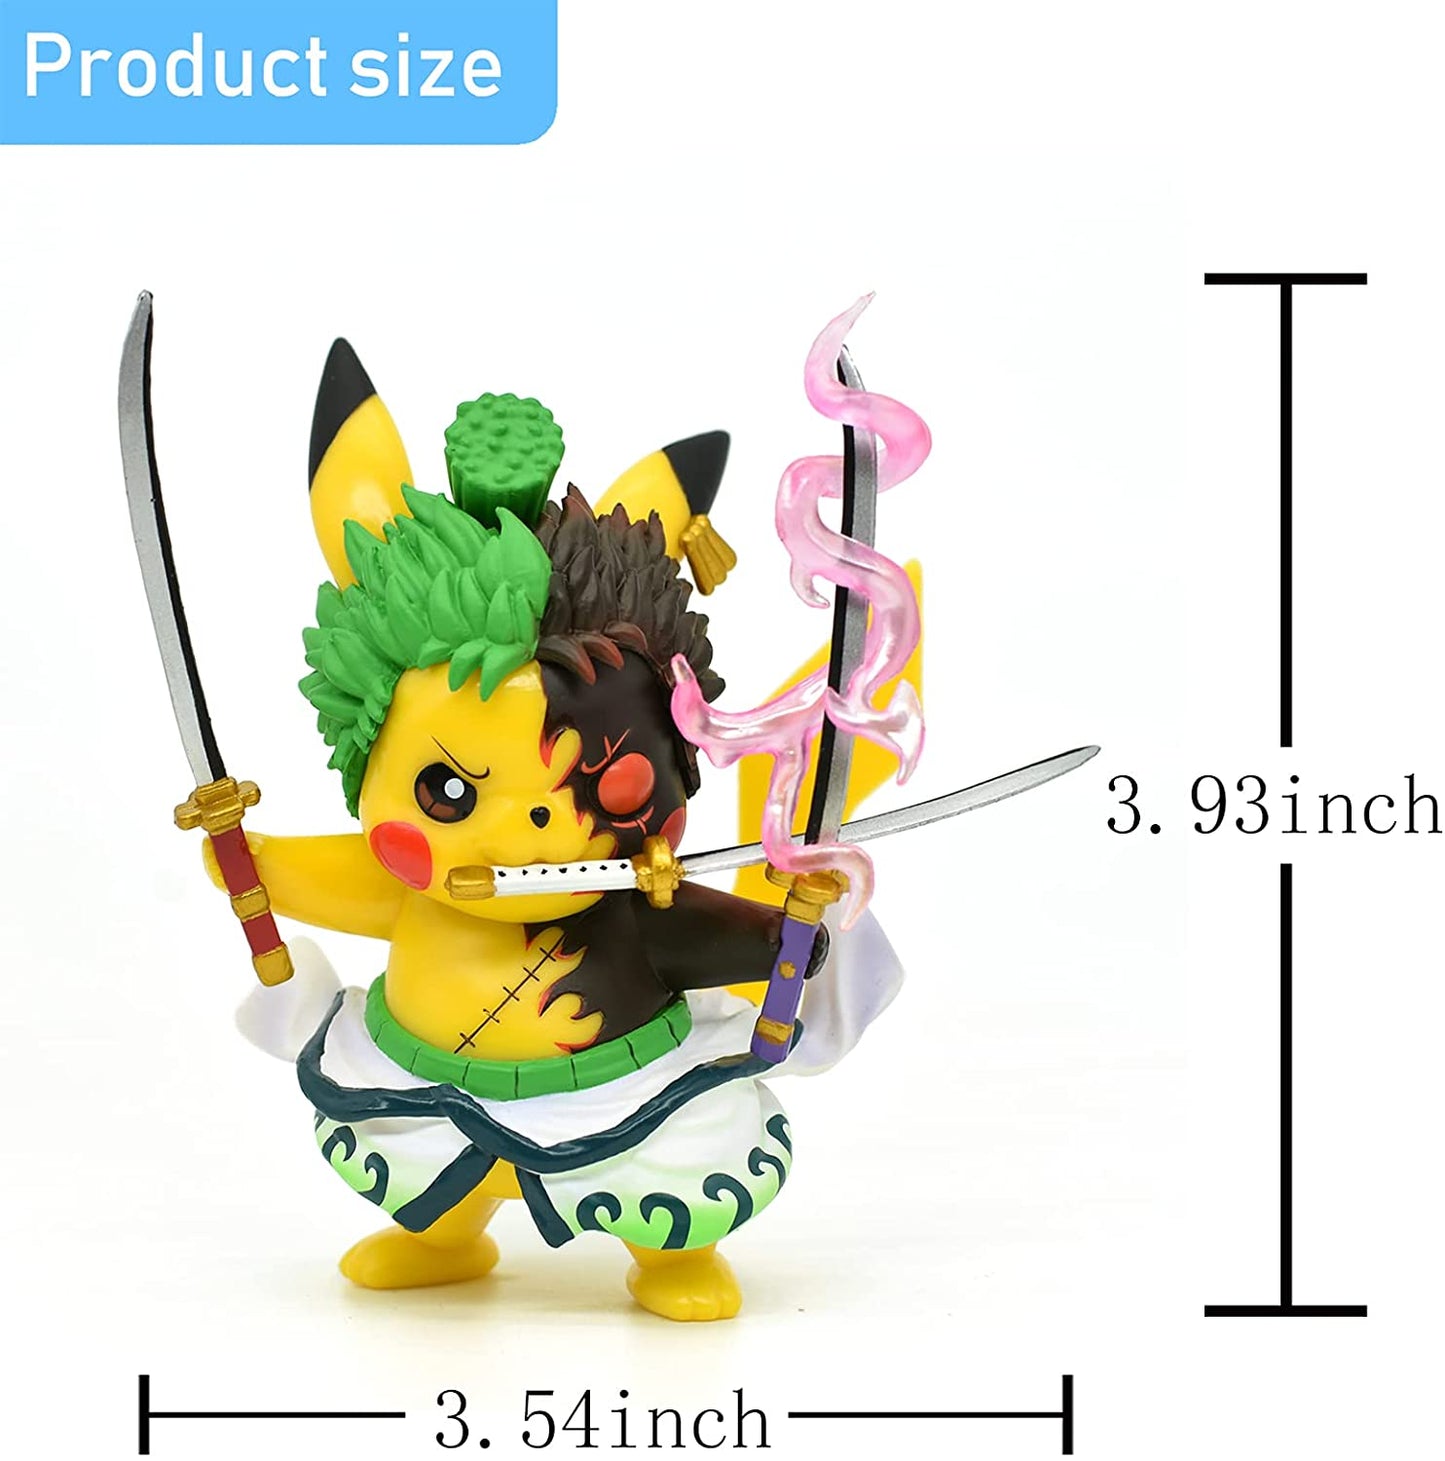 Pikachu Cosplay Roronoa Zoro Action Figure